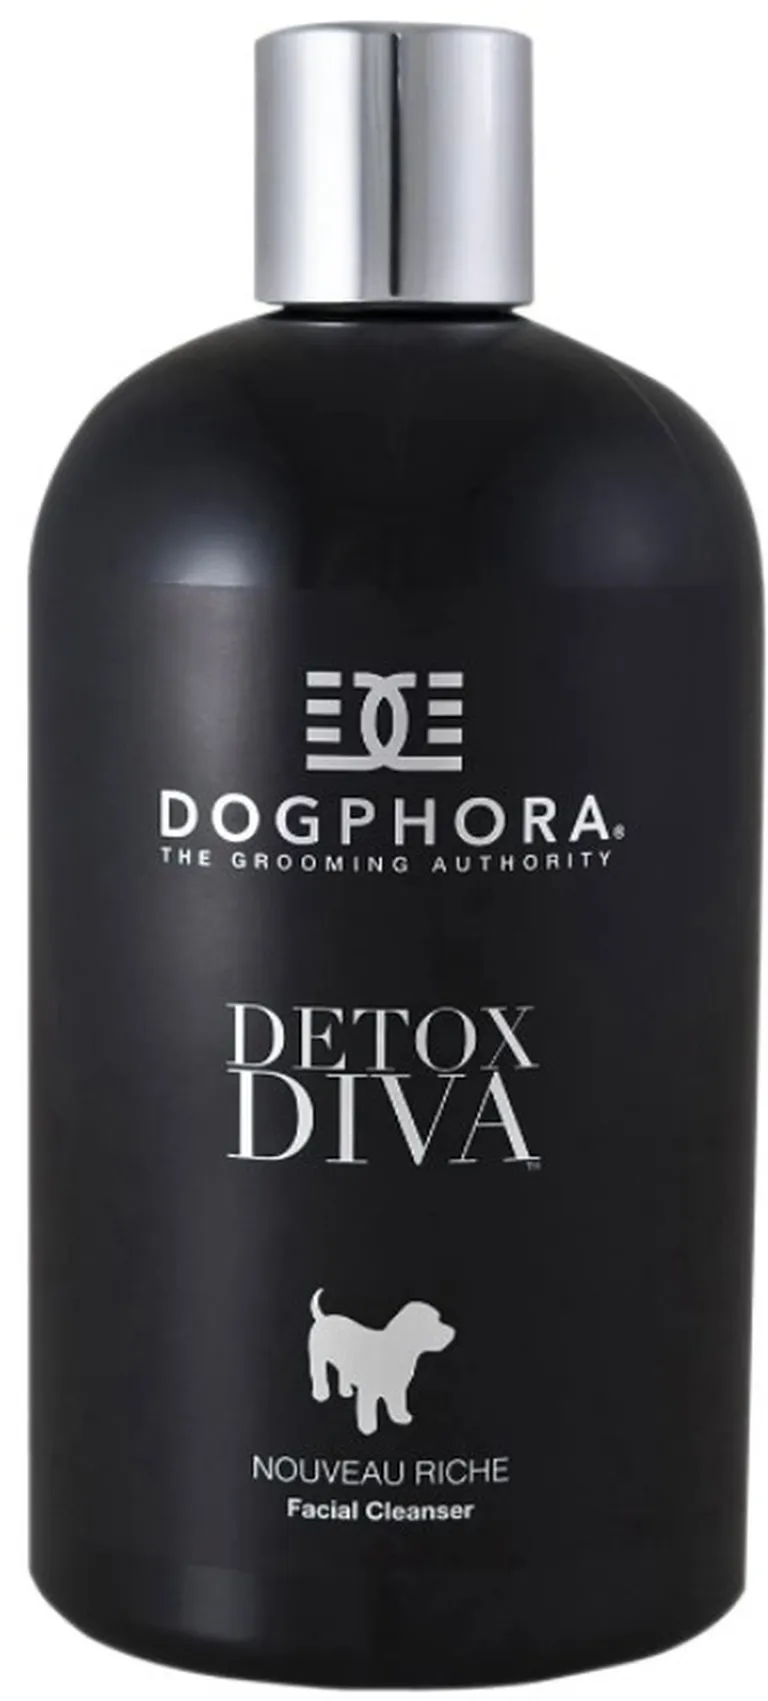 Dogphora Detox Diva Facial Cleanser Photo 1